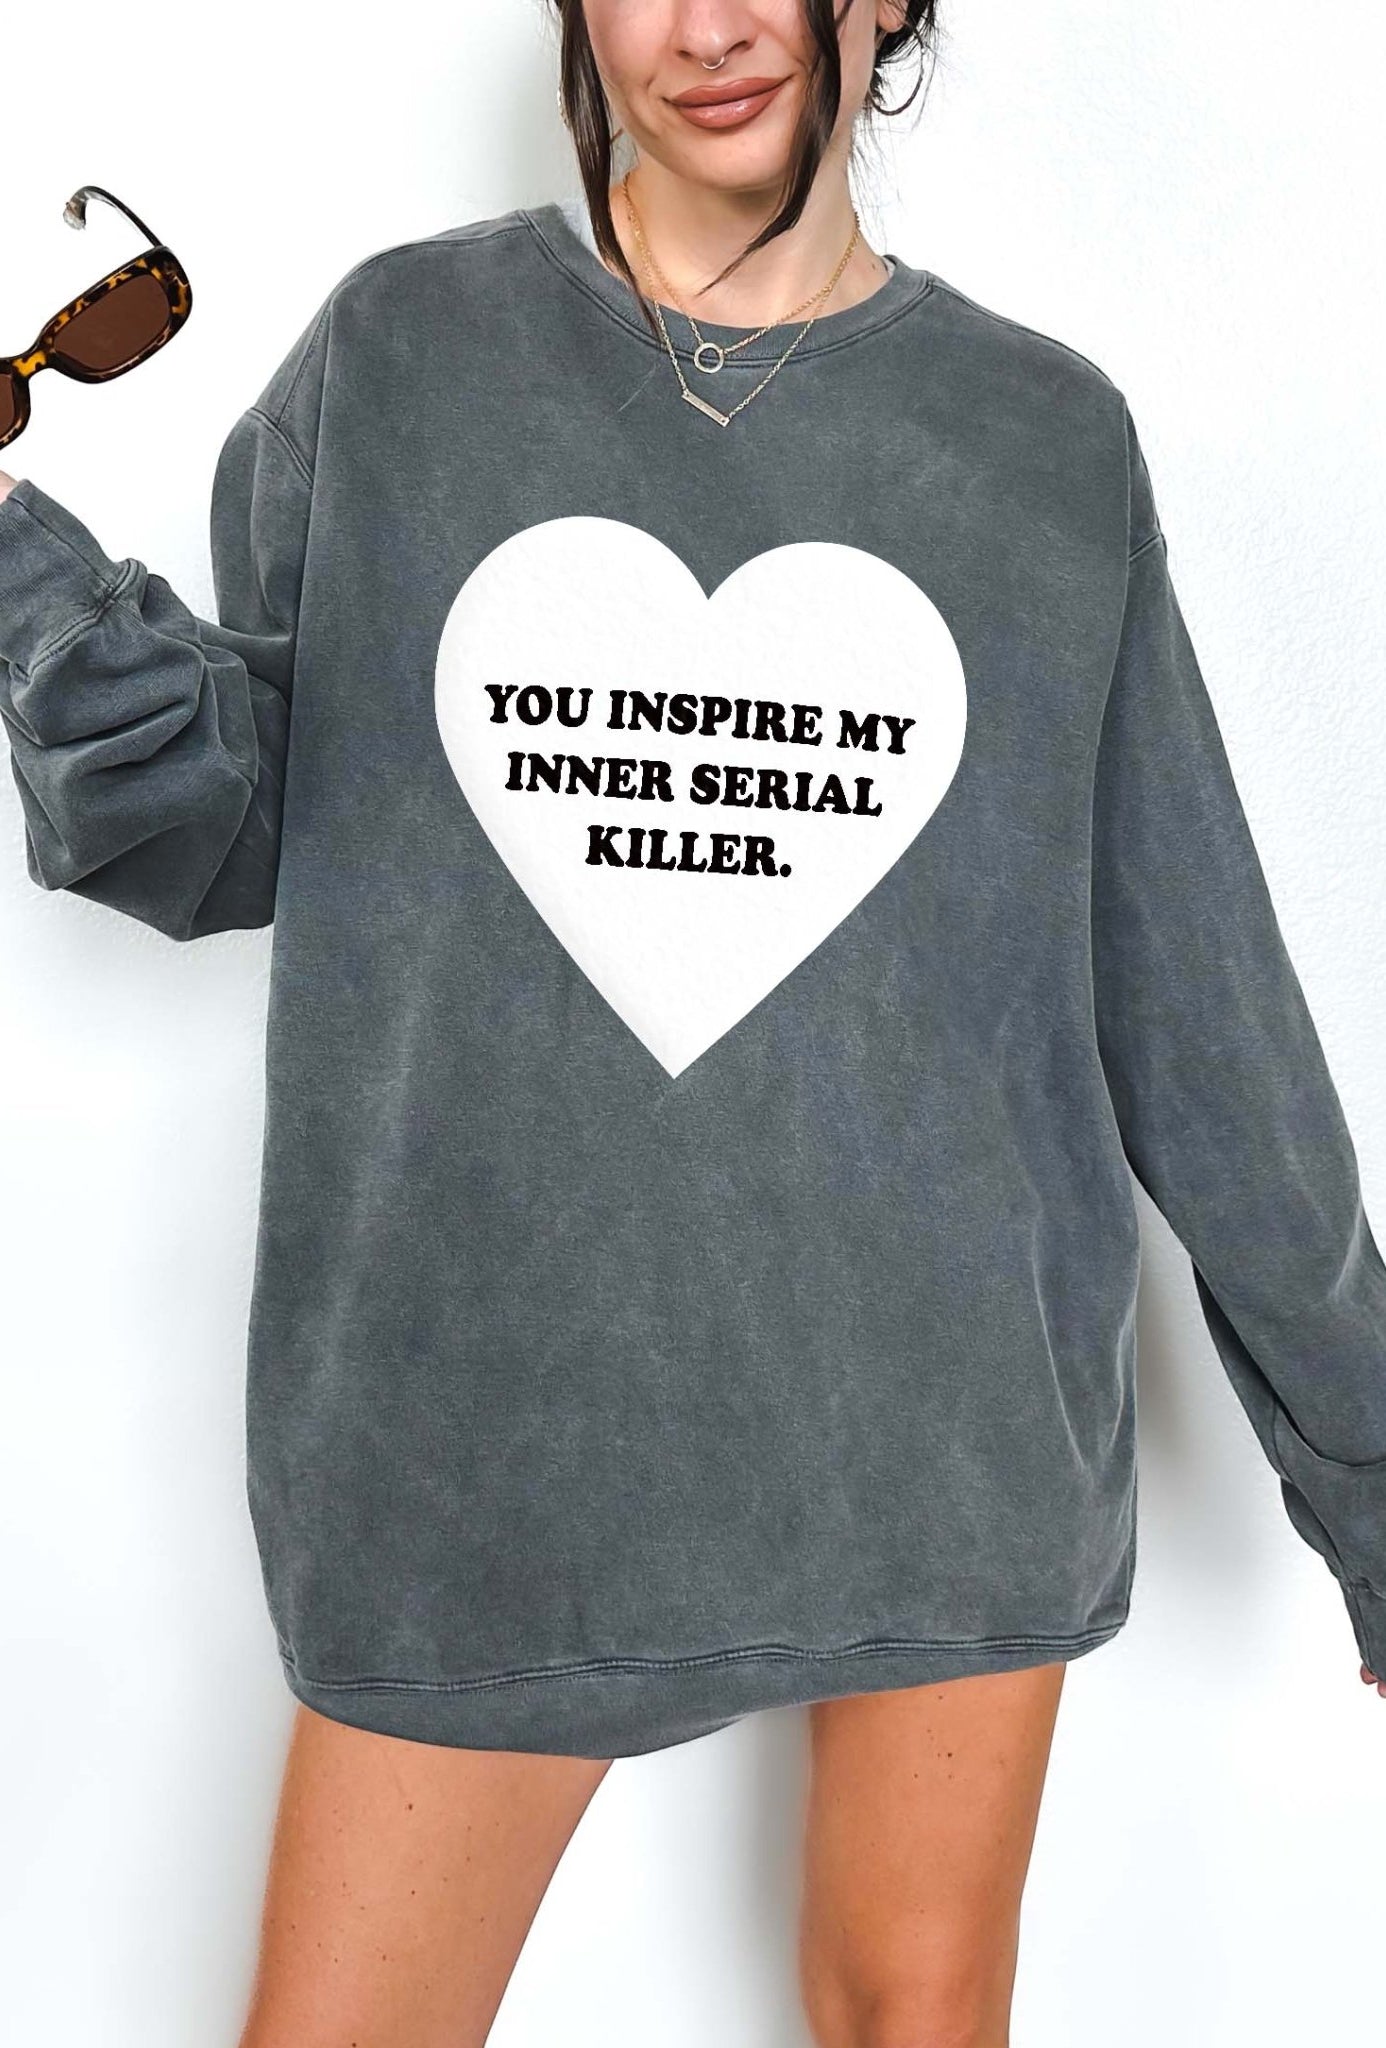 You Inspire My Inner Serial Killer Crew Sweatshirt - UntamedEgo LLC.